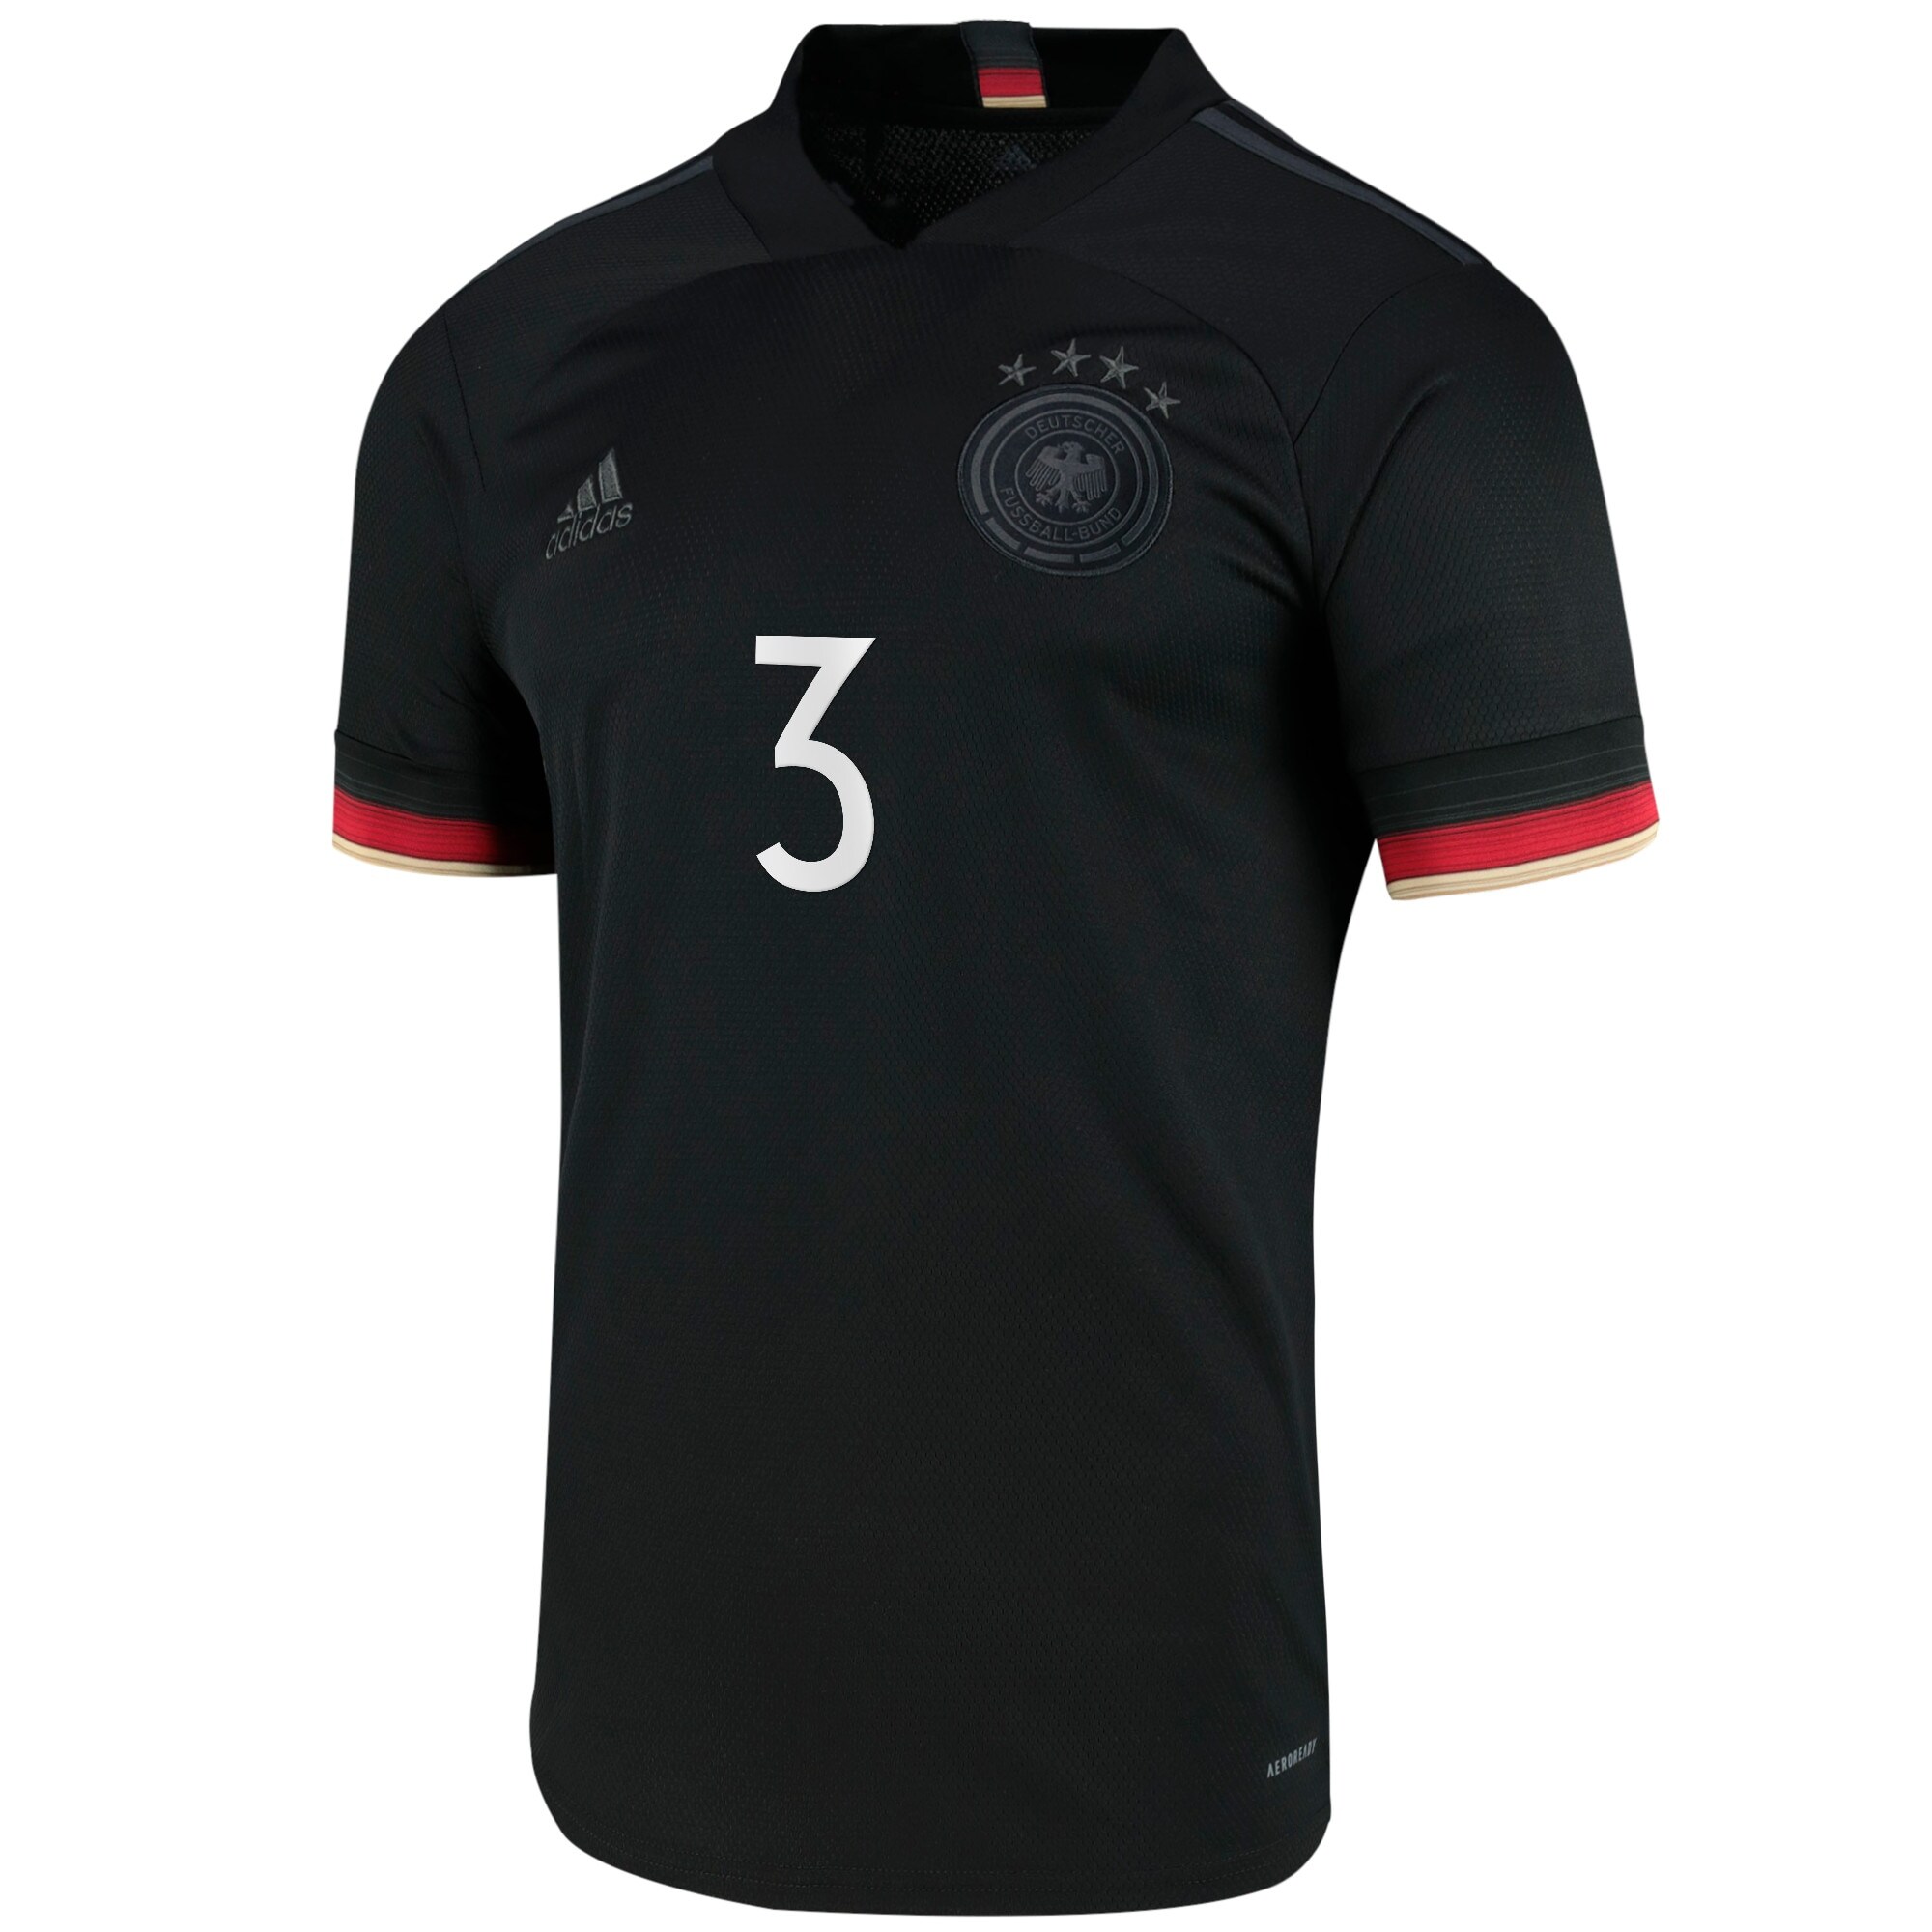 Germany Away Shirt 2021-22 with Halstenberg 3 printing